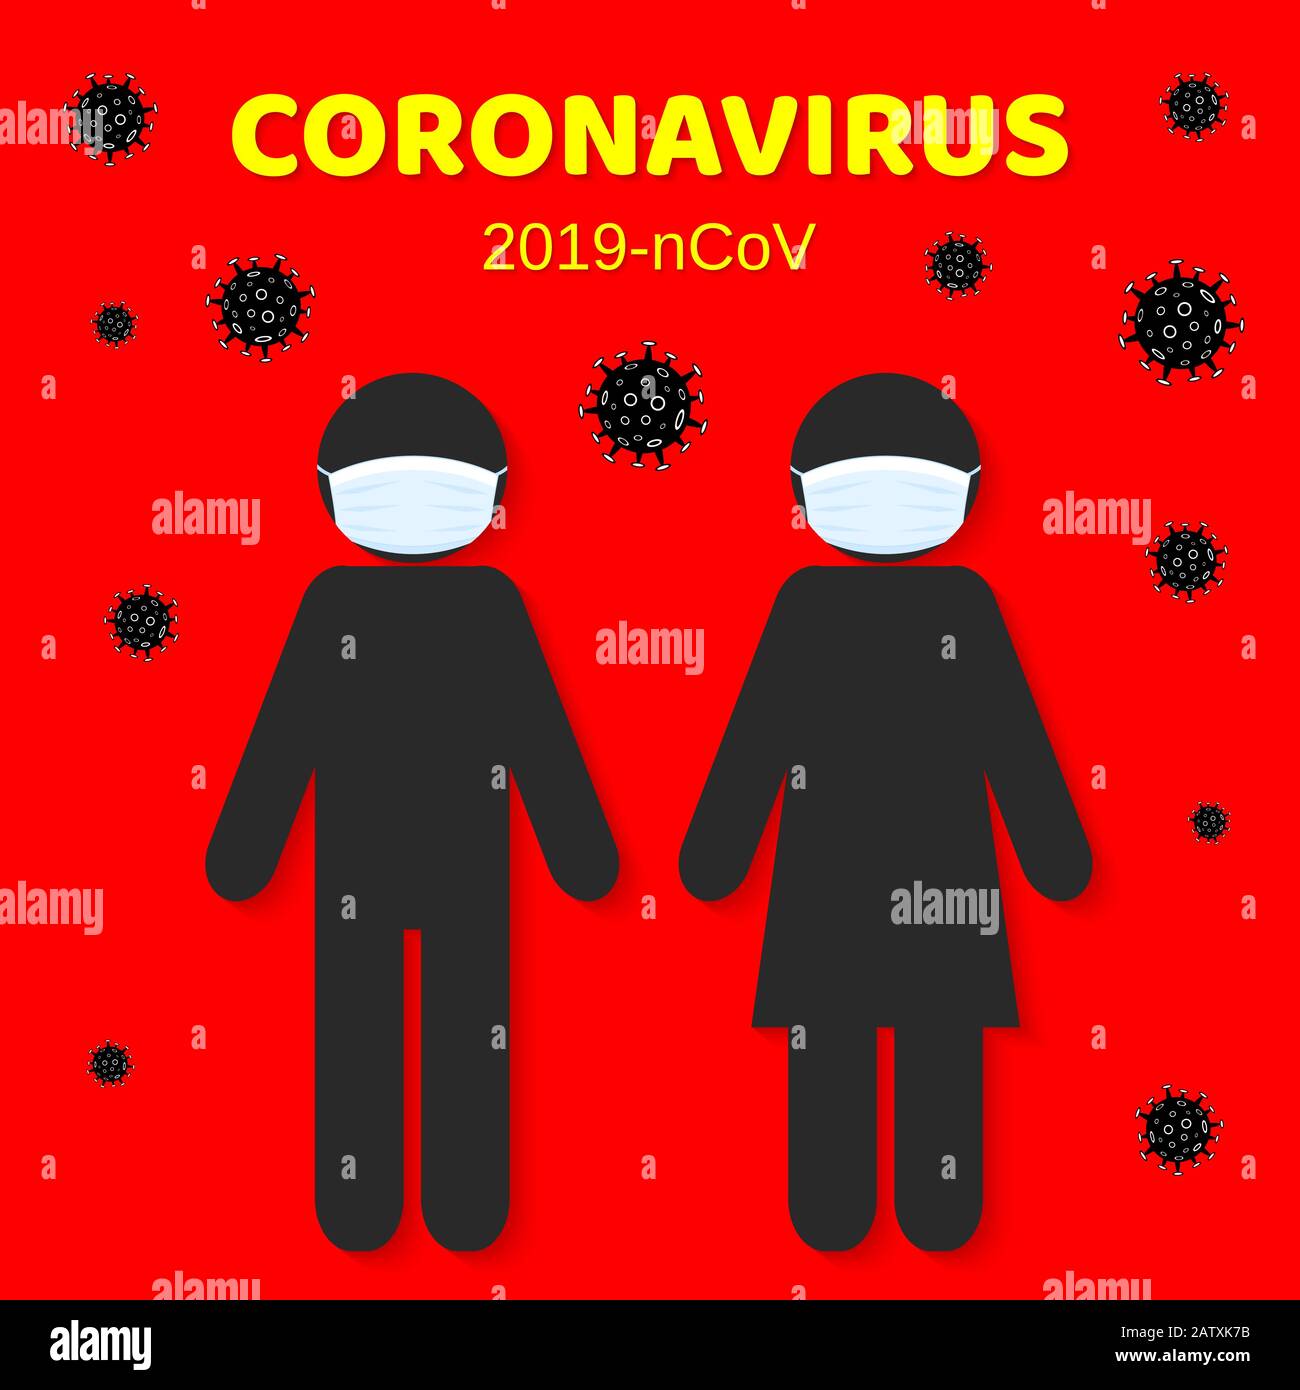 Wuhan coronavirus 2019-nCoV outbreak concept. Coronavirus danger and public health risk disease and flu outbreak. Pandemic medical concept with danger Stock Vector